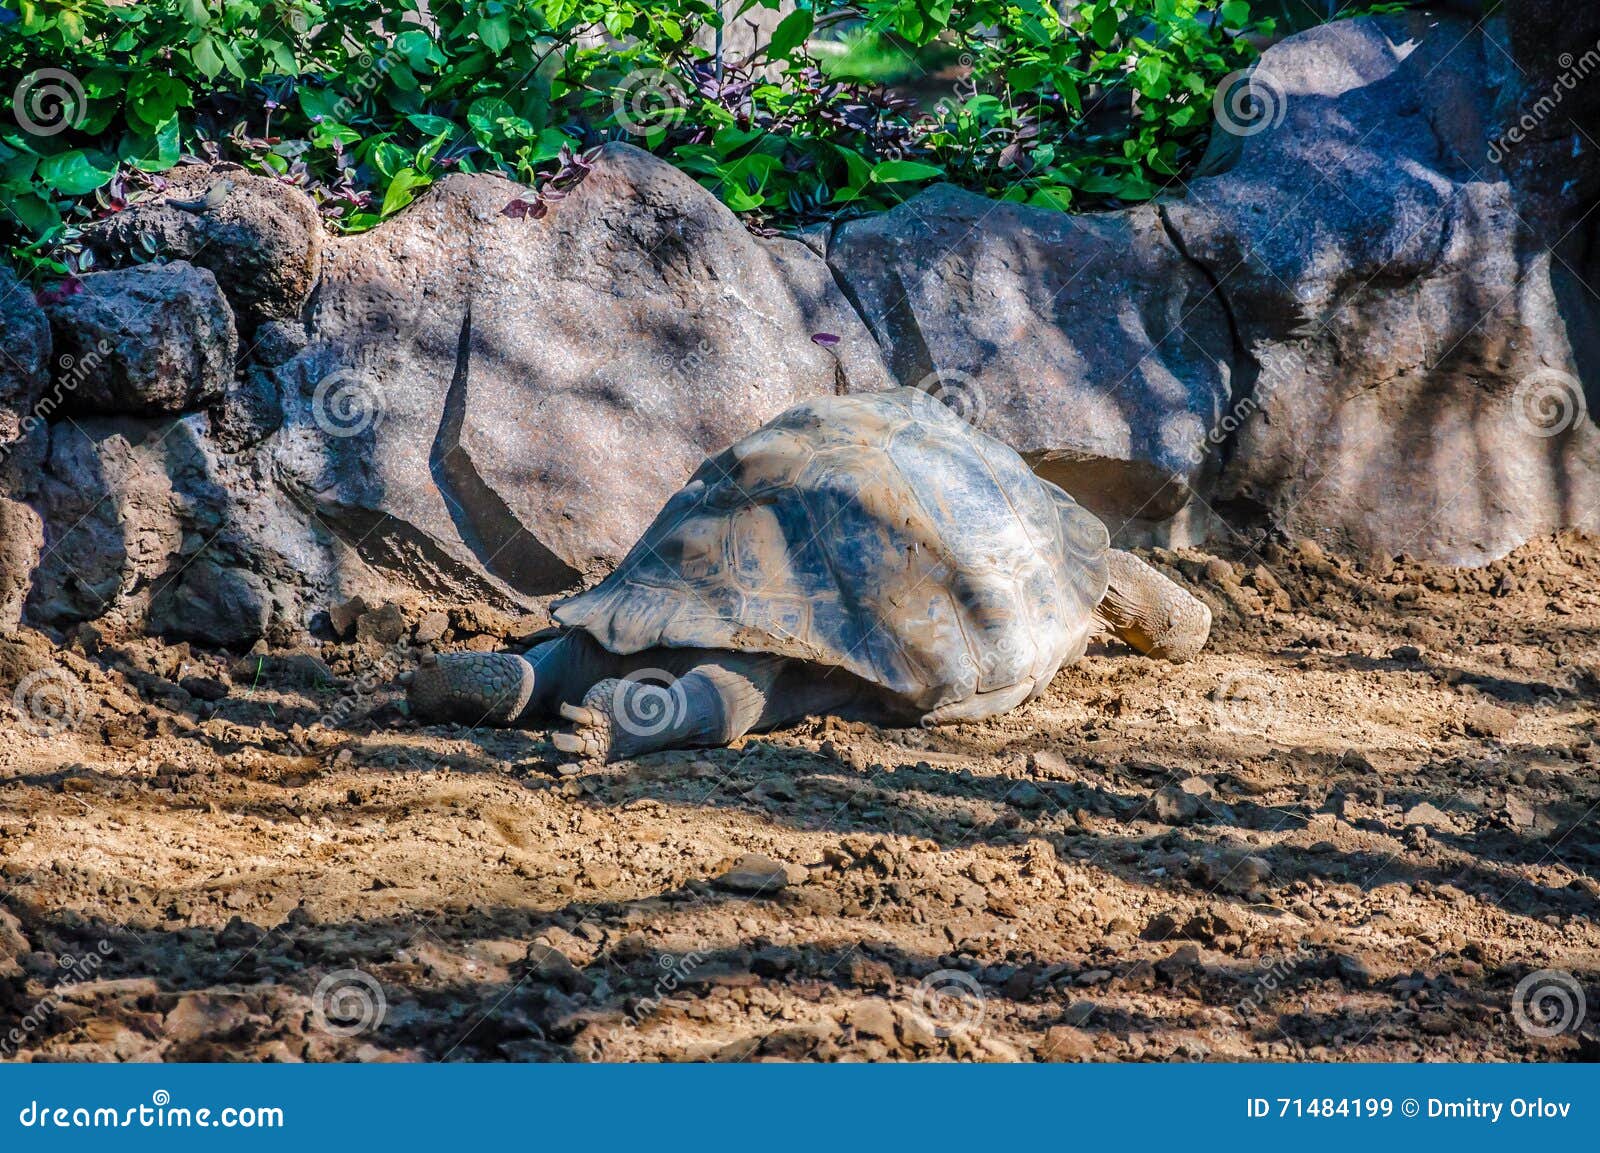 galapagos giant tortoise, chelonoidis nigra in loro parque, tene